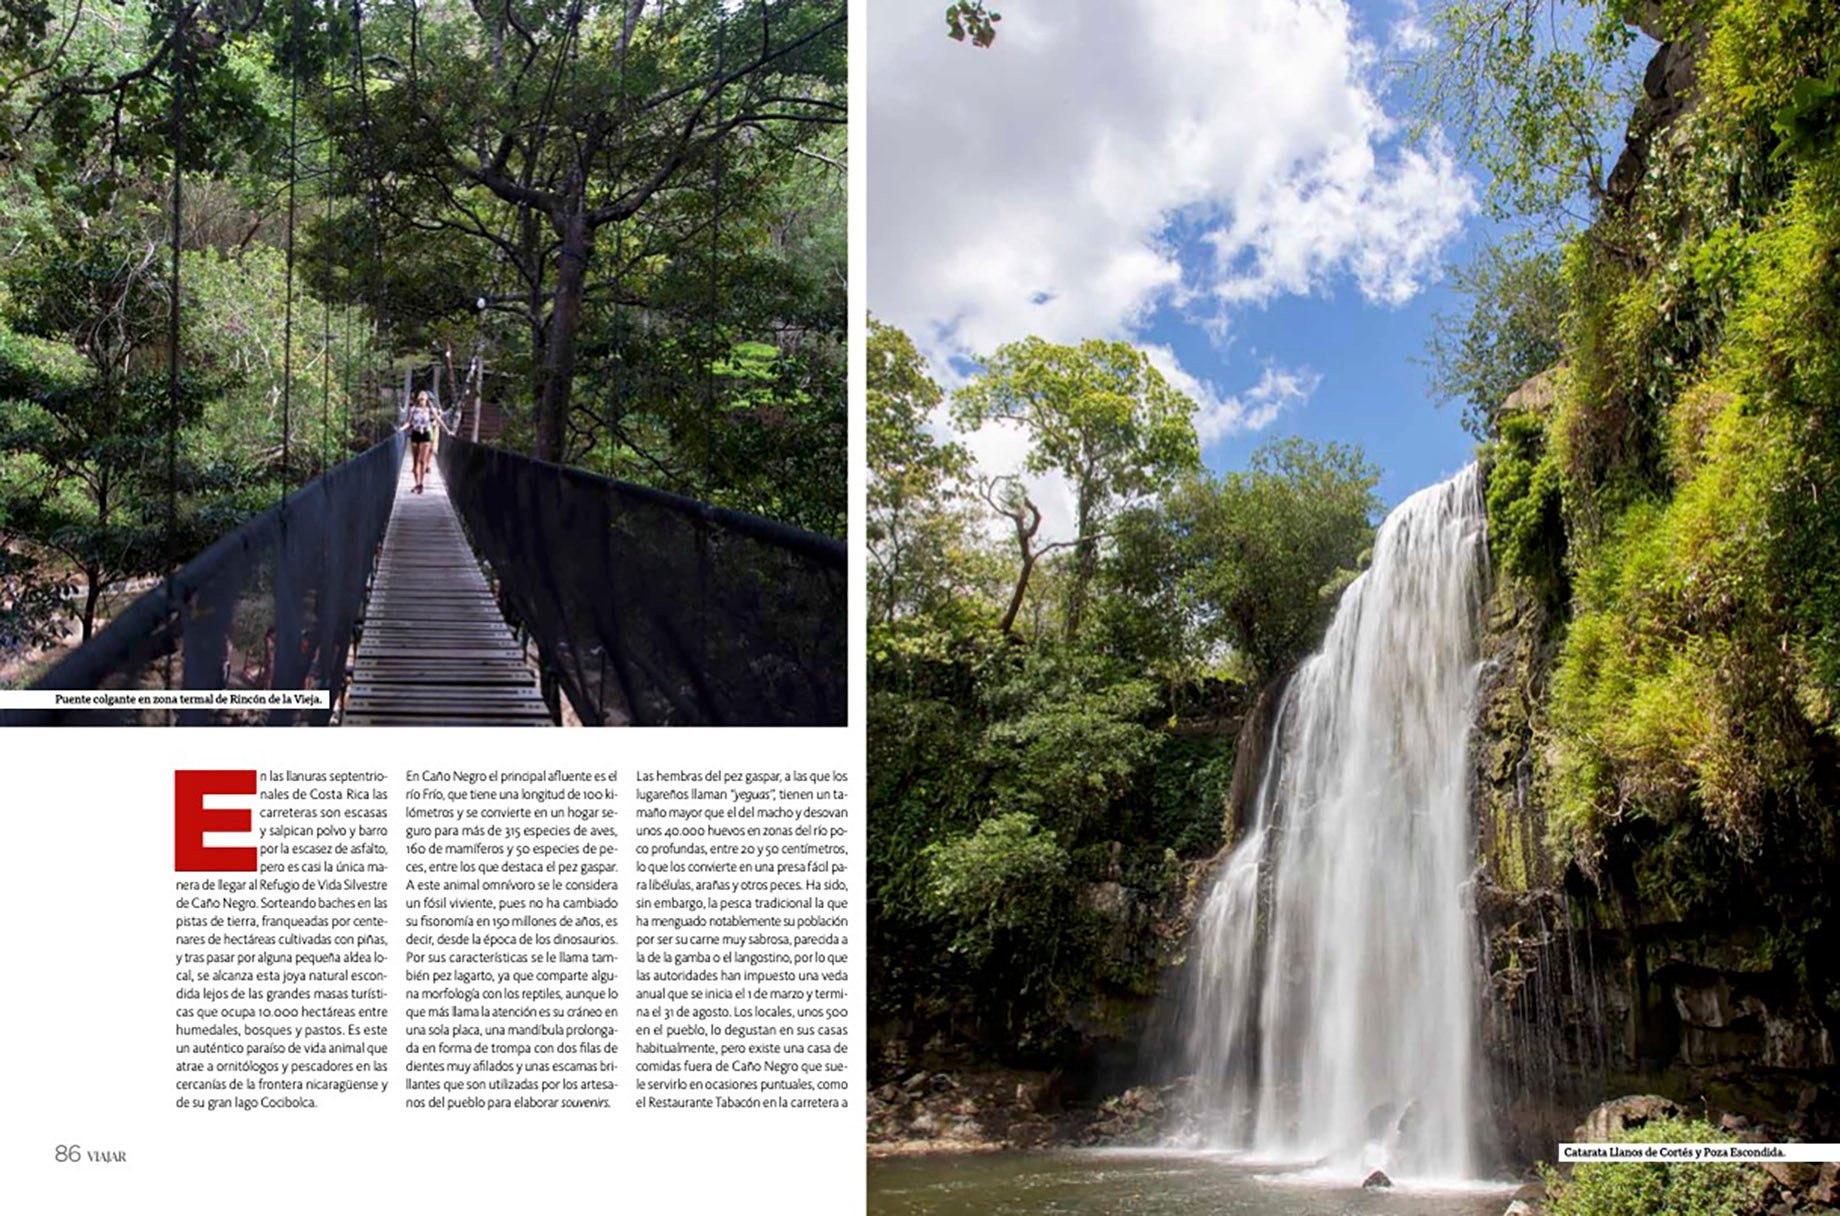 Cristina Candel's images of Costa Rica in Viajar Magazine.